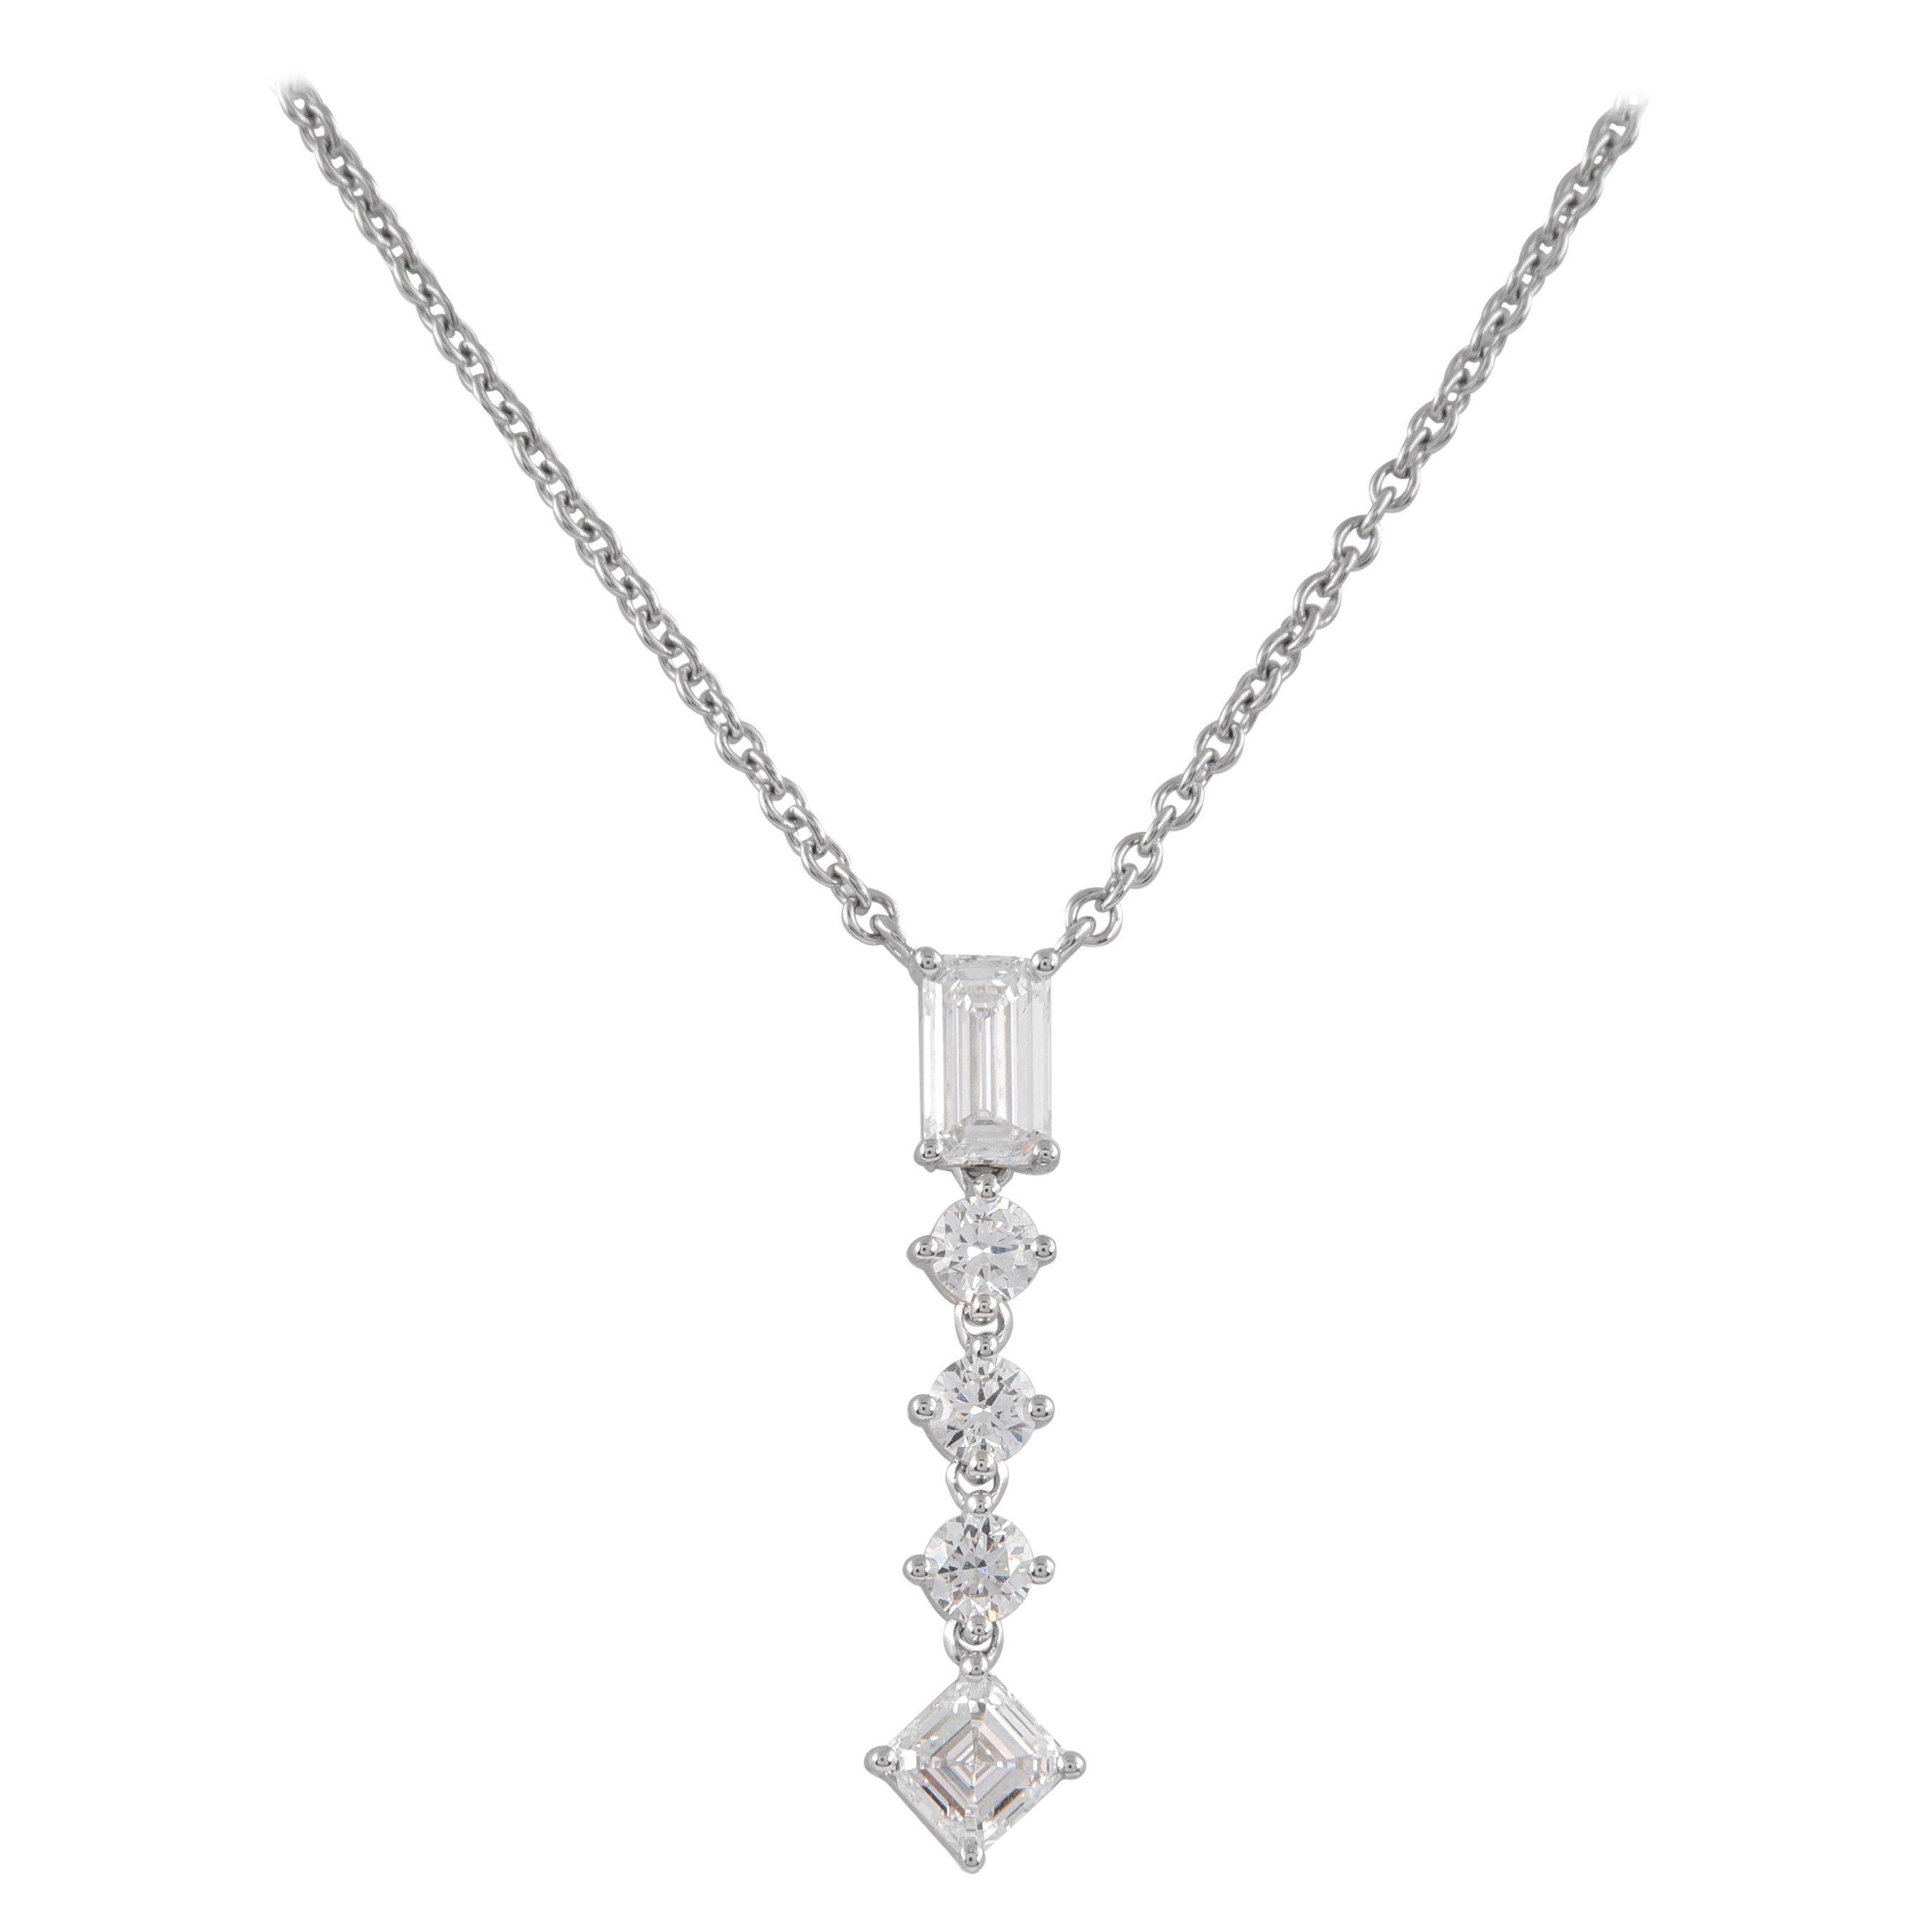 Alexander GIA Certified 1.56ctt Diamond Pendant Necklace 18k White Gold